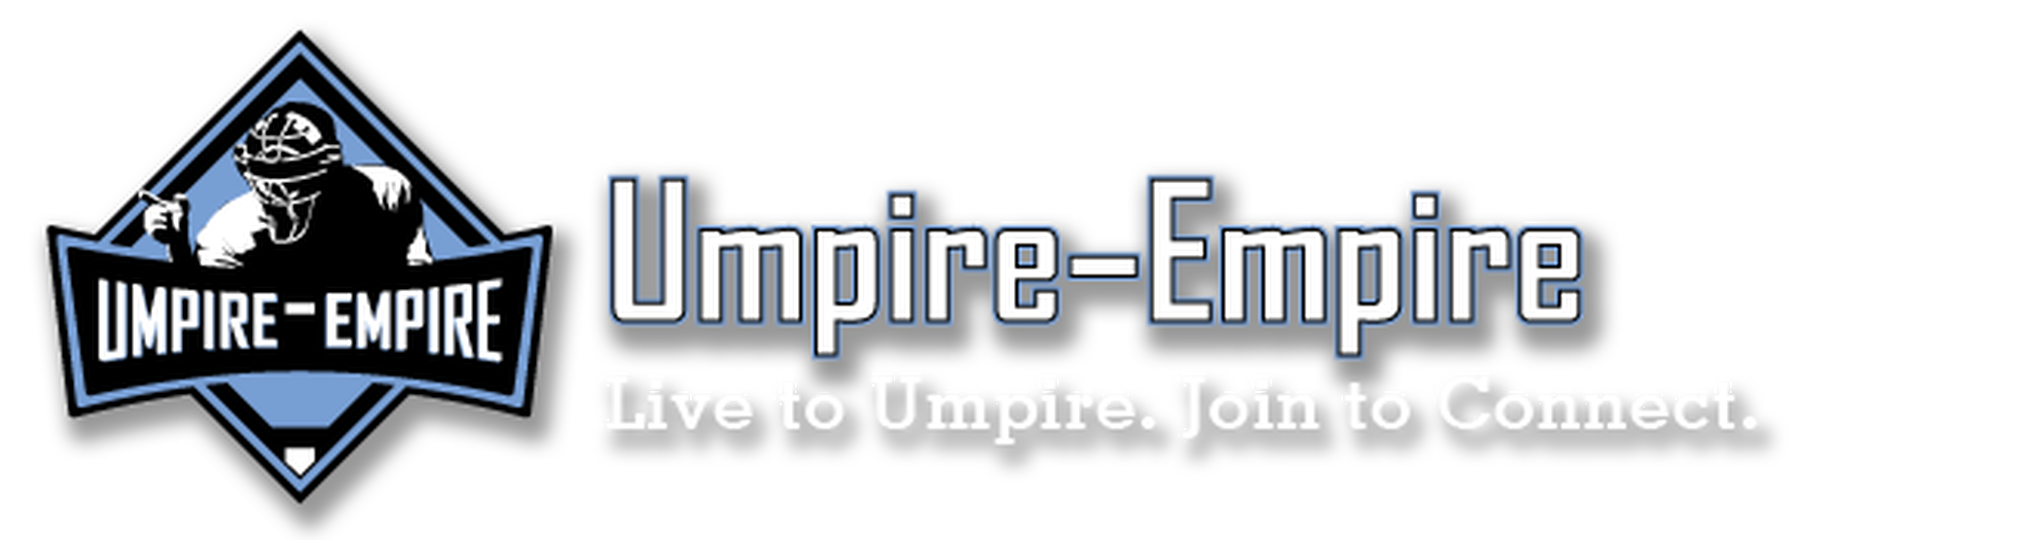 Umpire-Empire